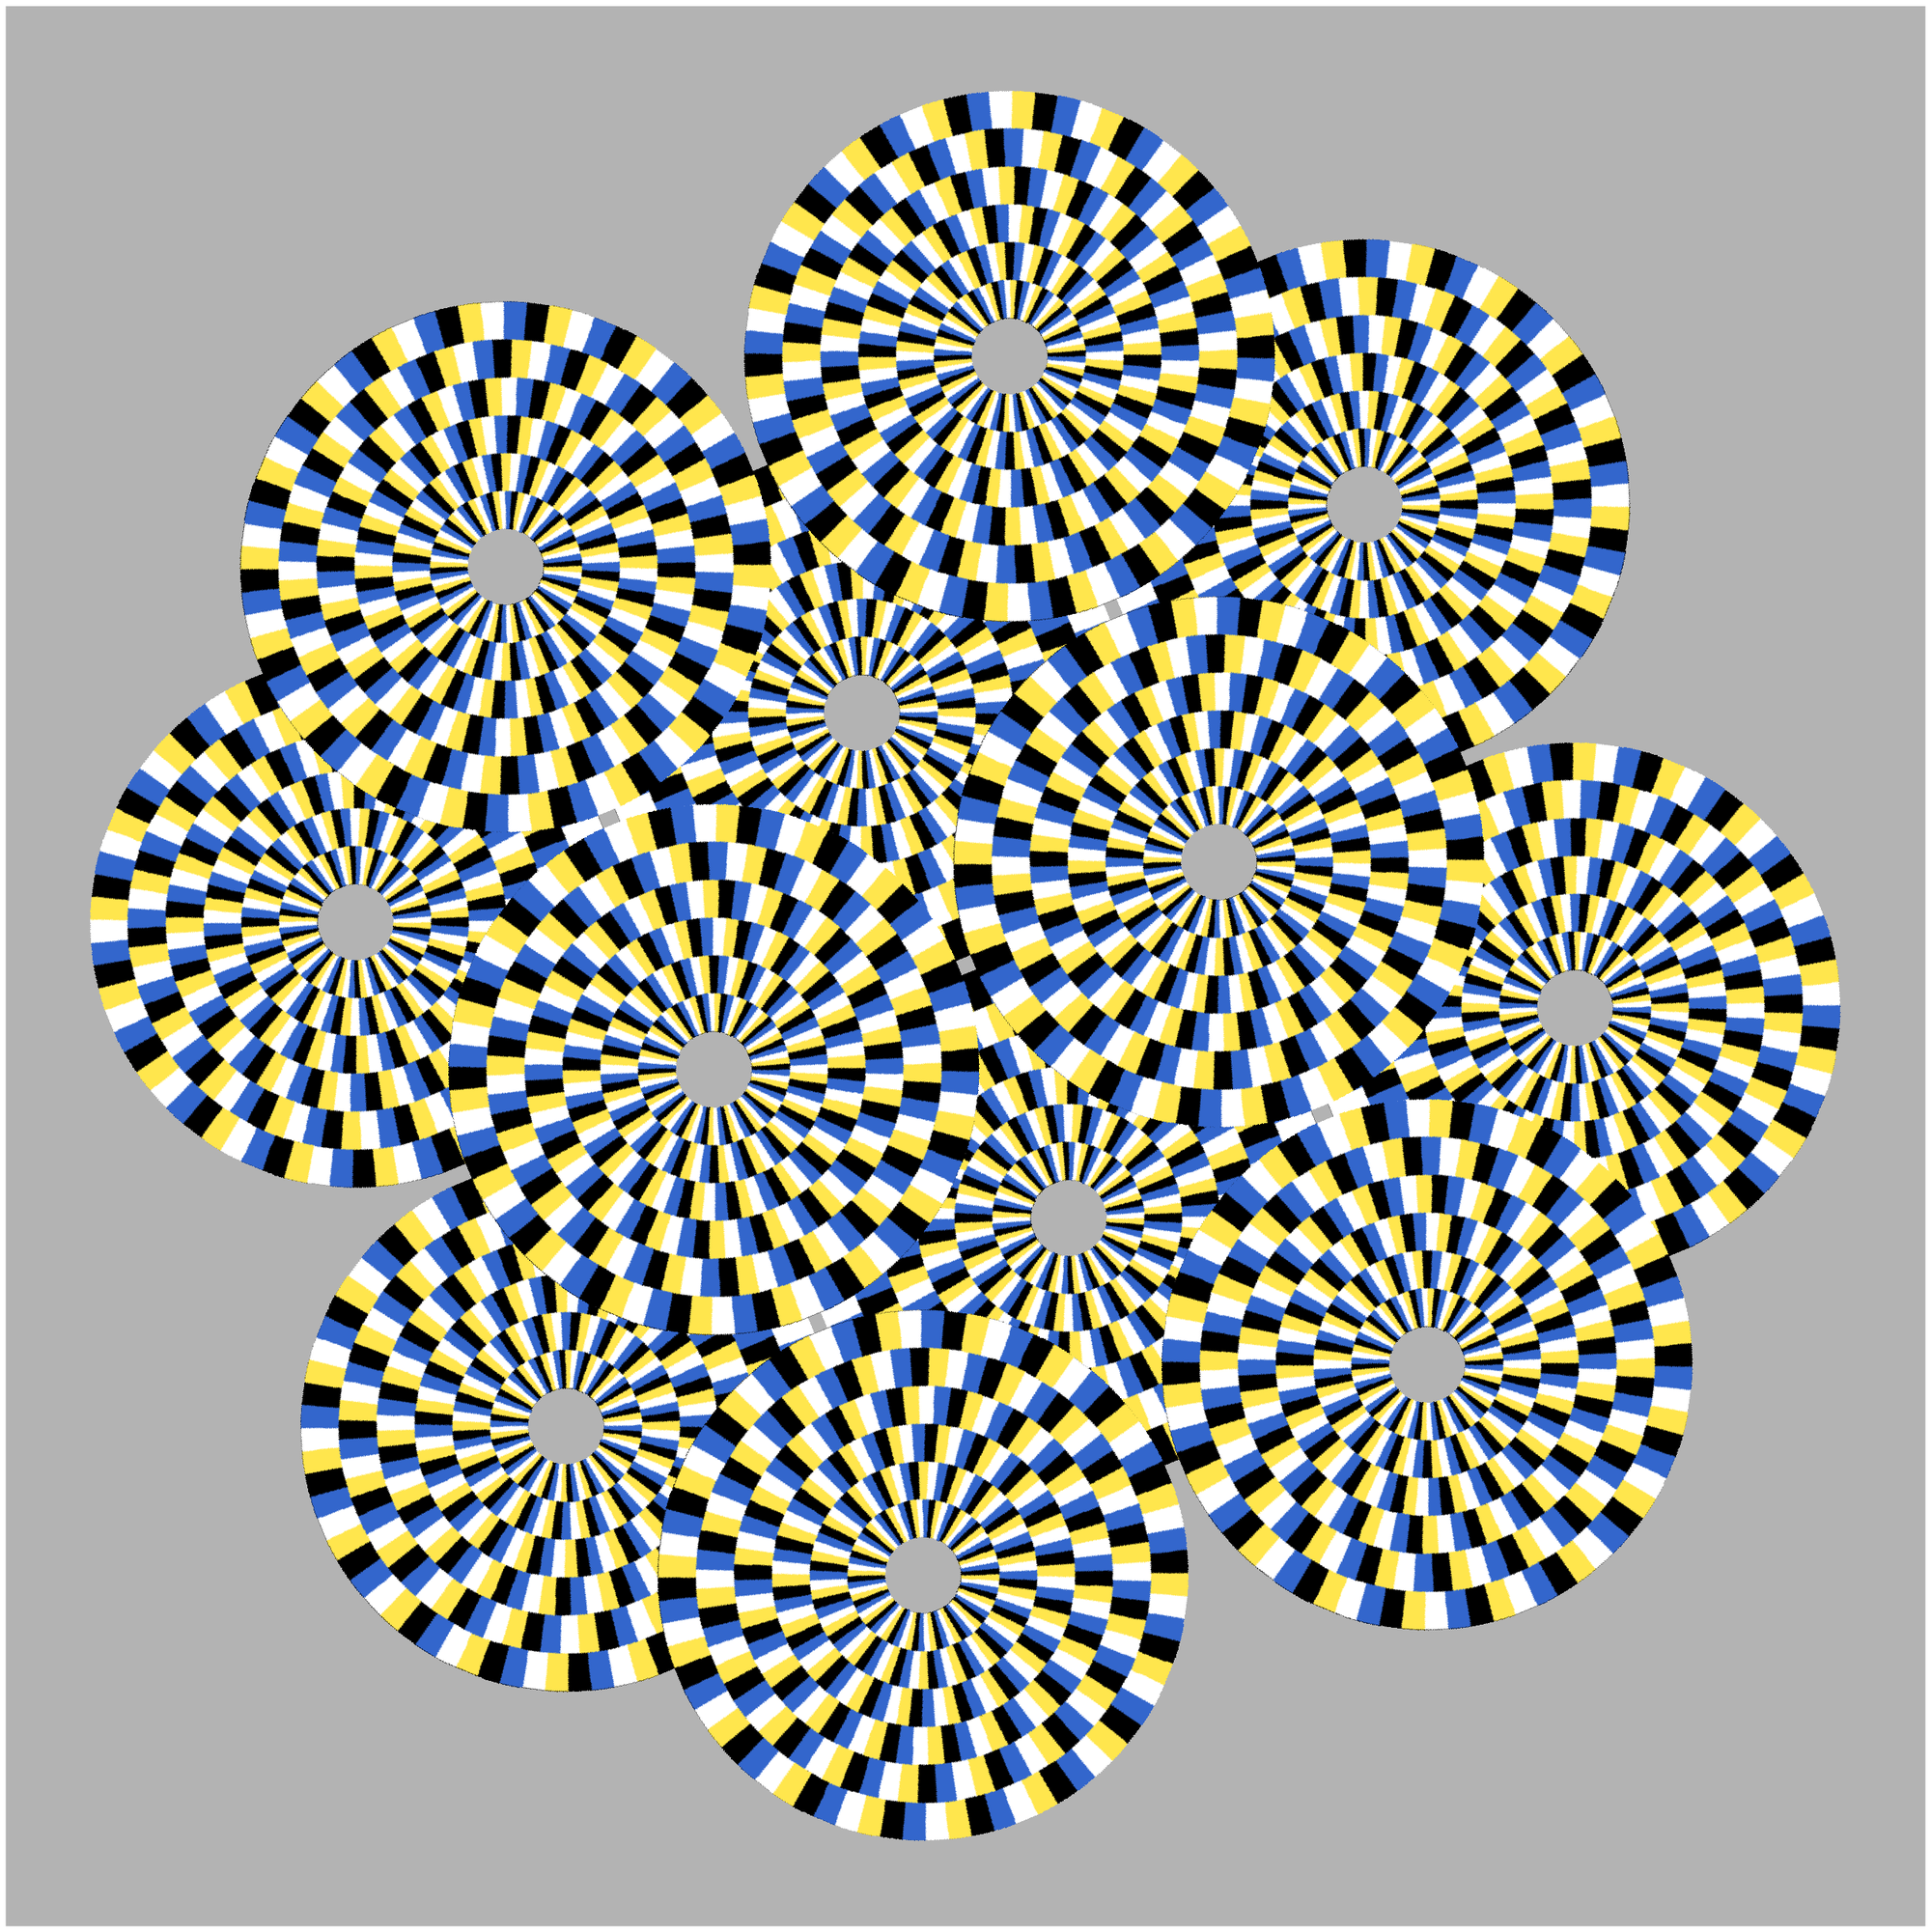 Rotating Snakes Illusion